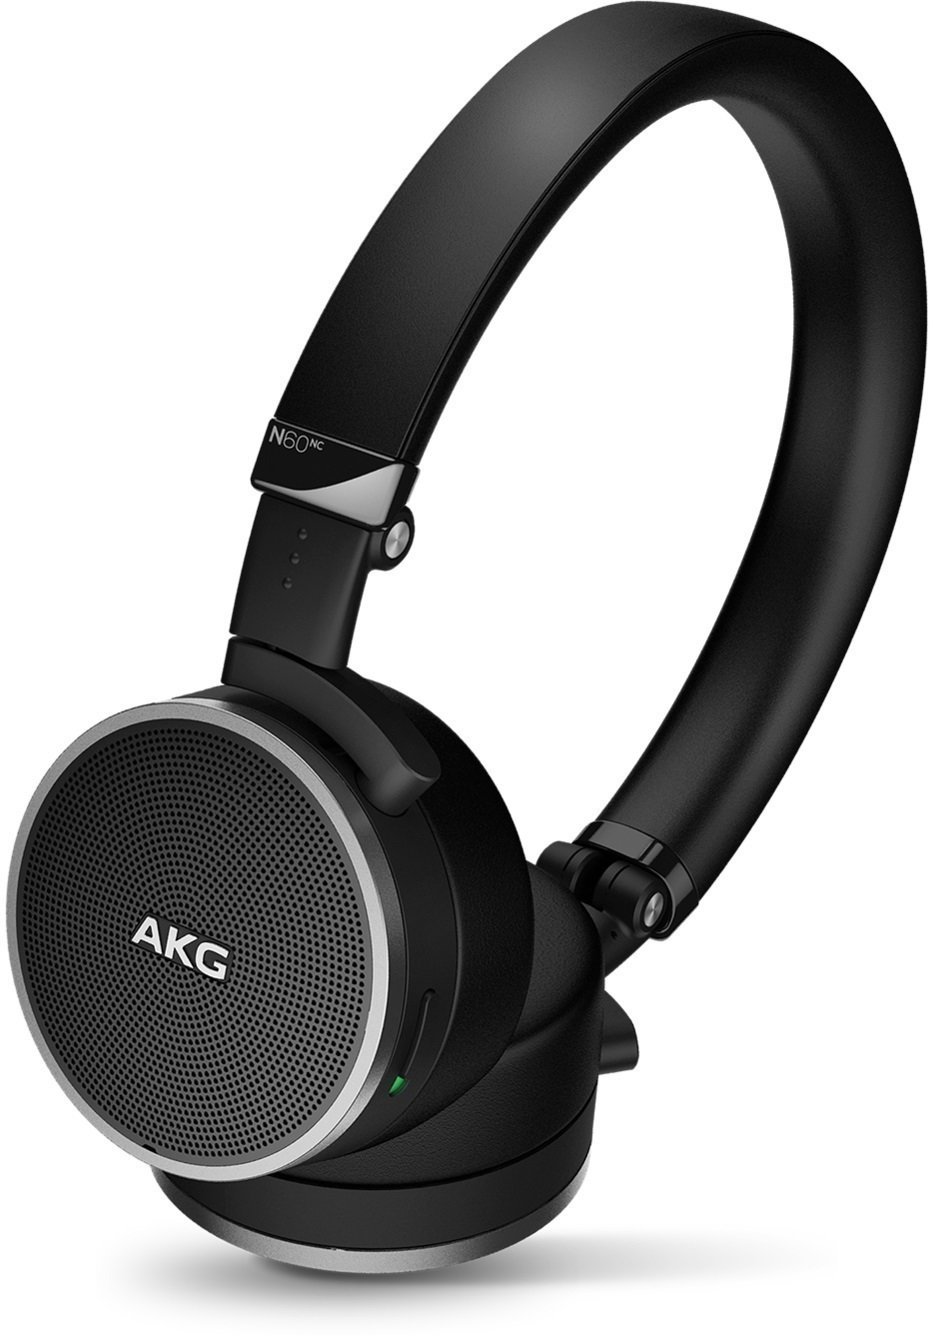 Hör-Sprech-Kombination AKG N60NC